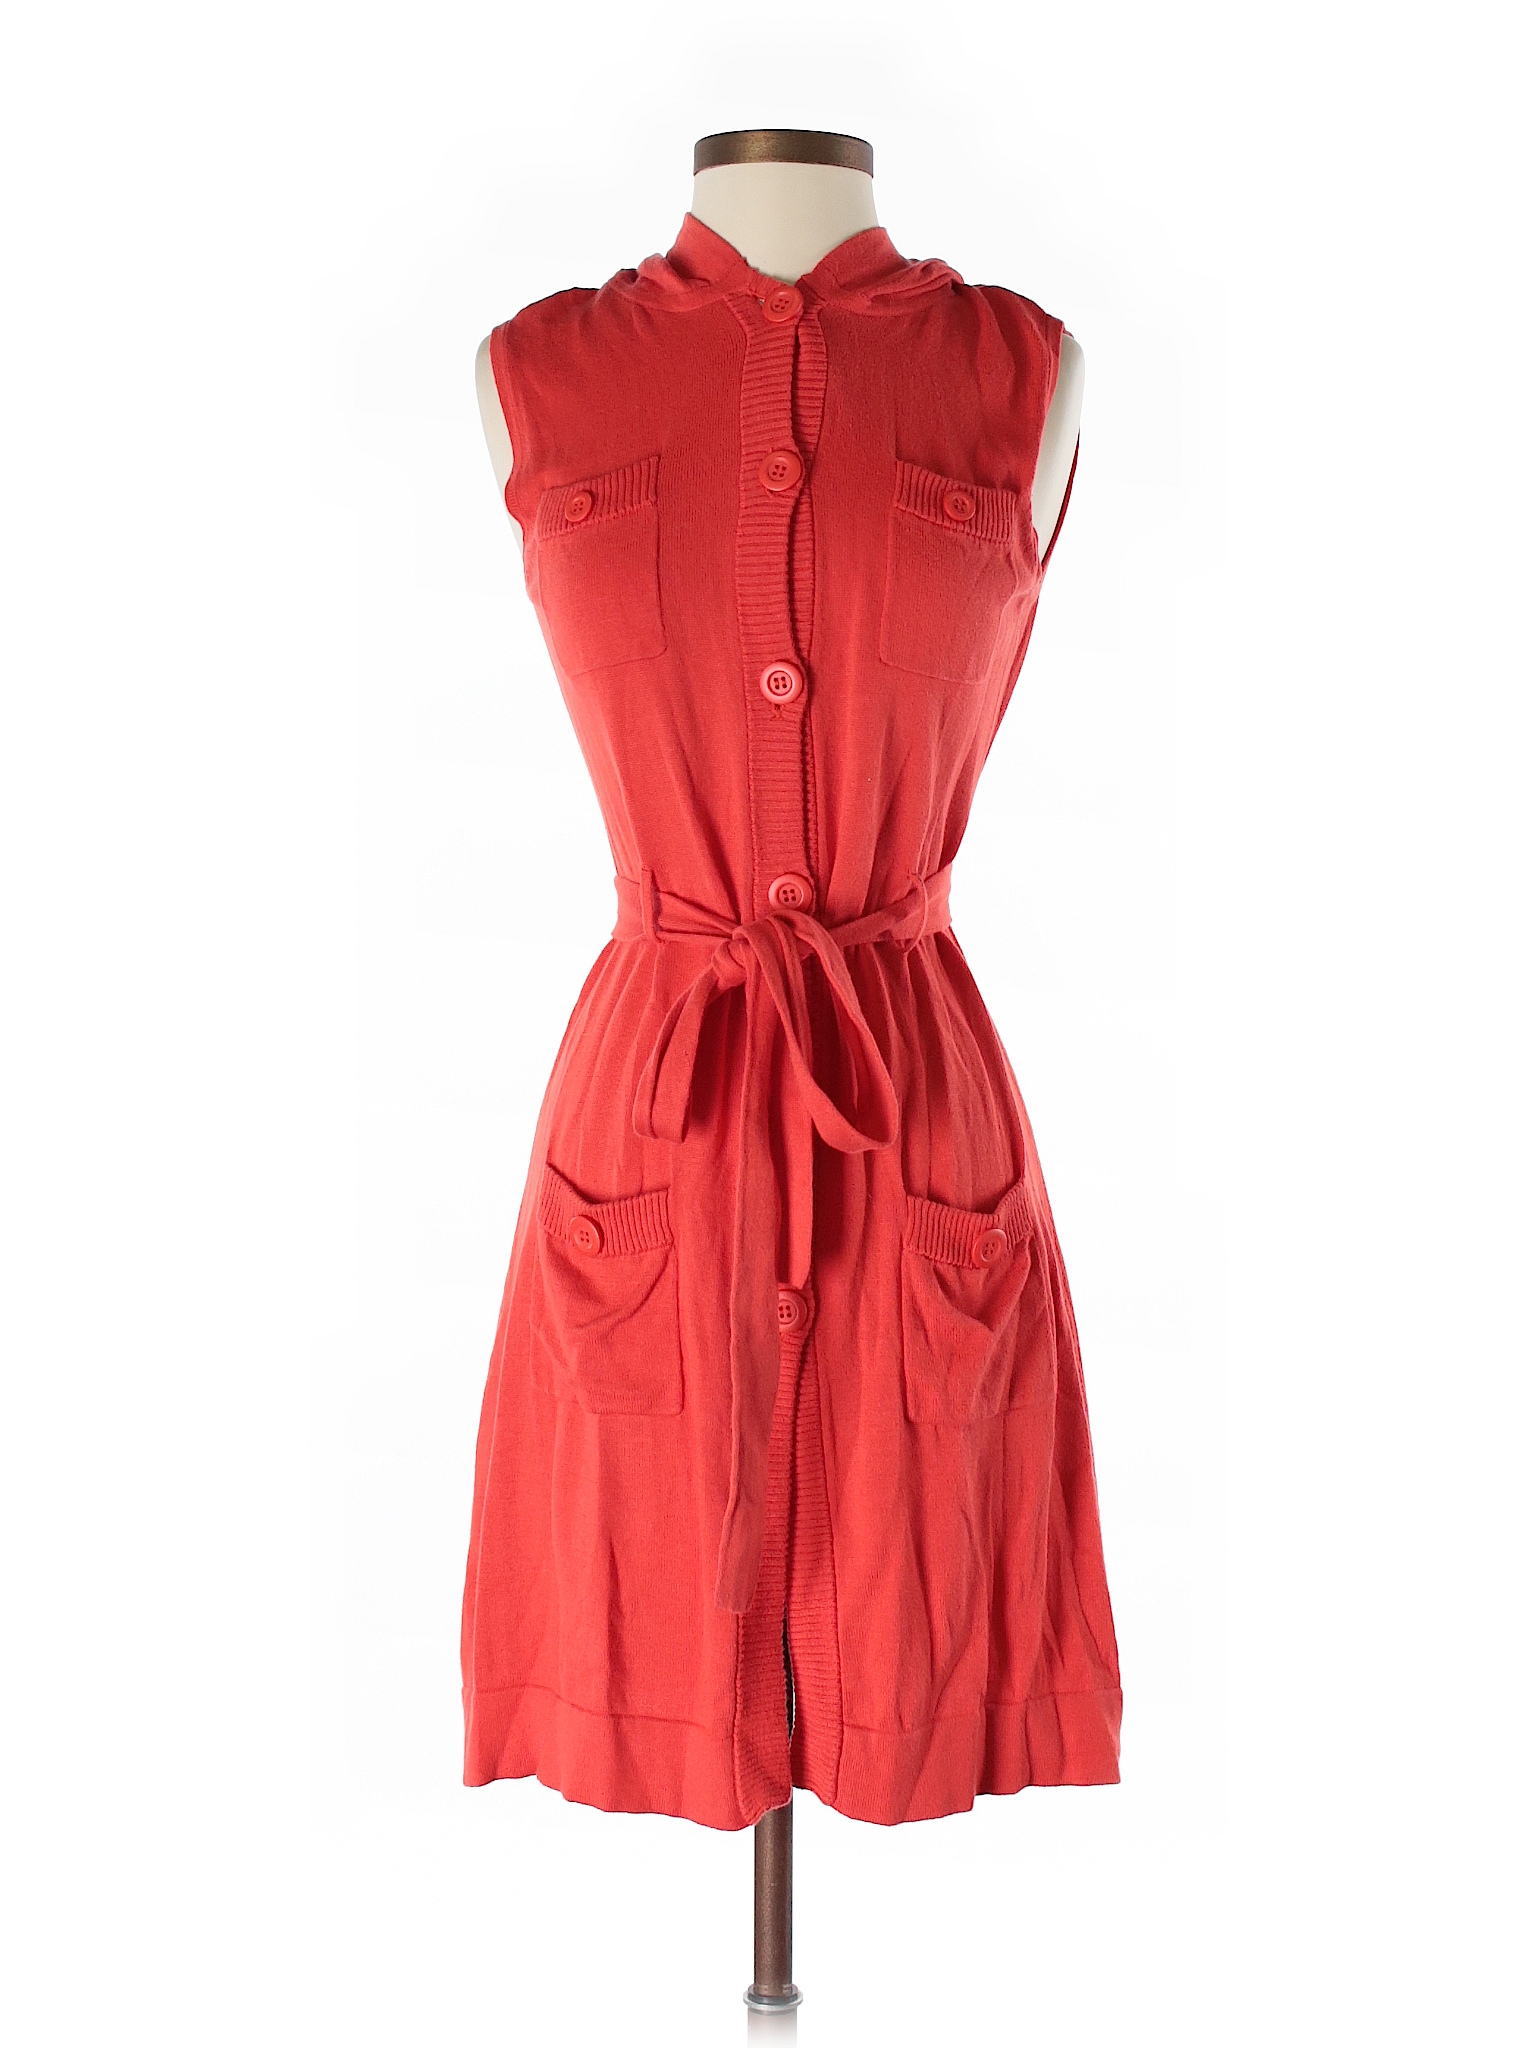 Tabitha 100% Cotton Solid Orange Sweater Dress Size S - 93% off | thredUP